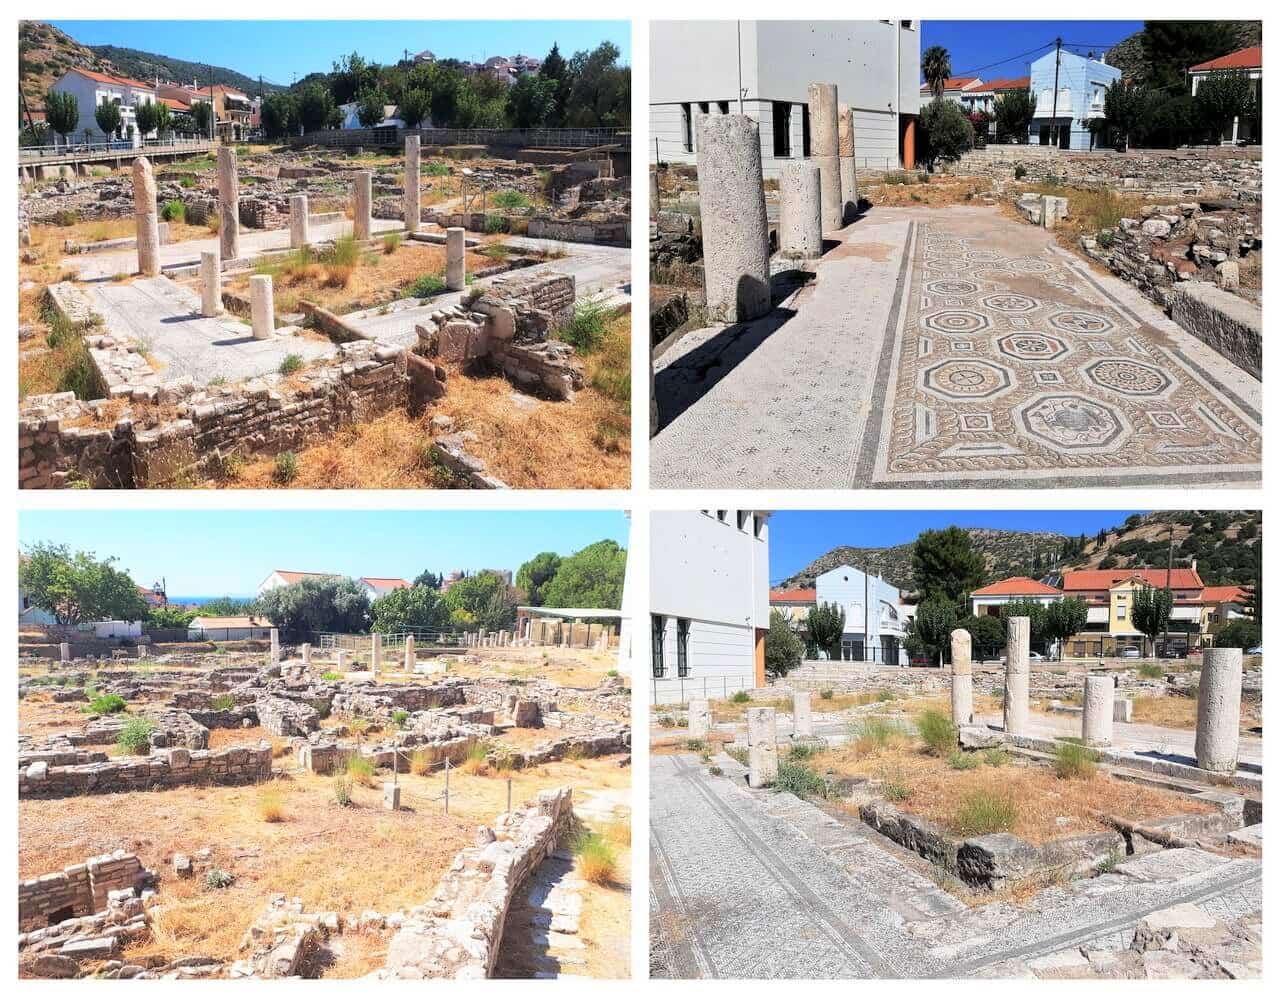 Roman Villa and the Ruins of the Ancient City of Samos